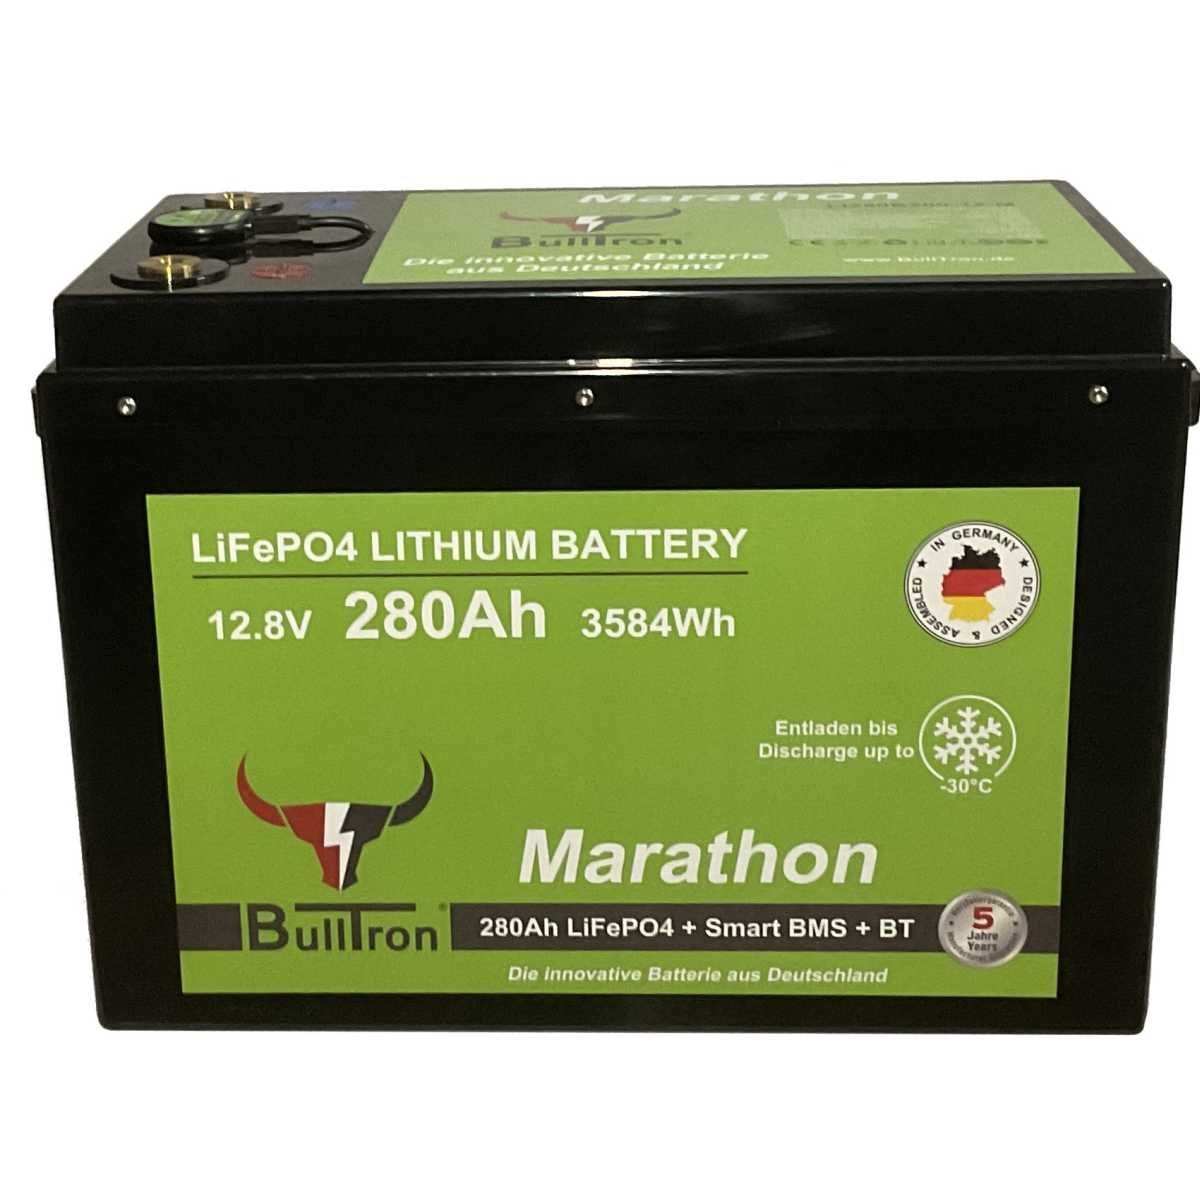 BULLTRON Lithium-Batterie MARATHON POLAR 280Ah 12V inkl. BMS 200A Dauerstrom - App - LI280B200-12-MP